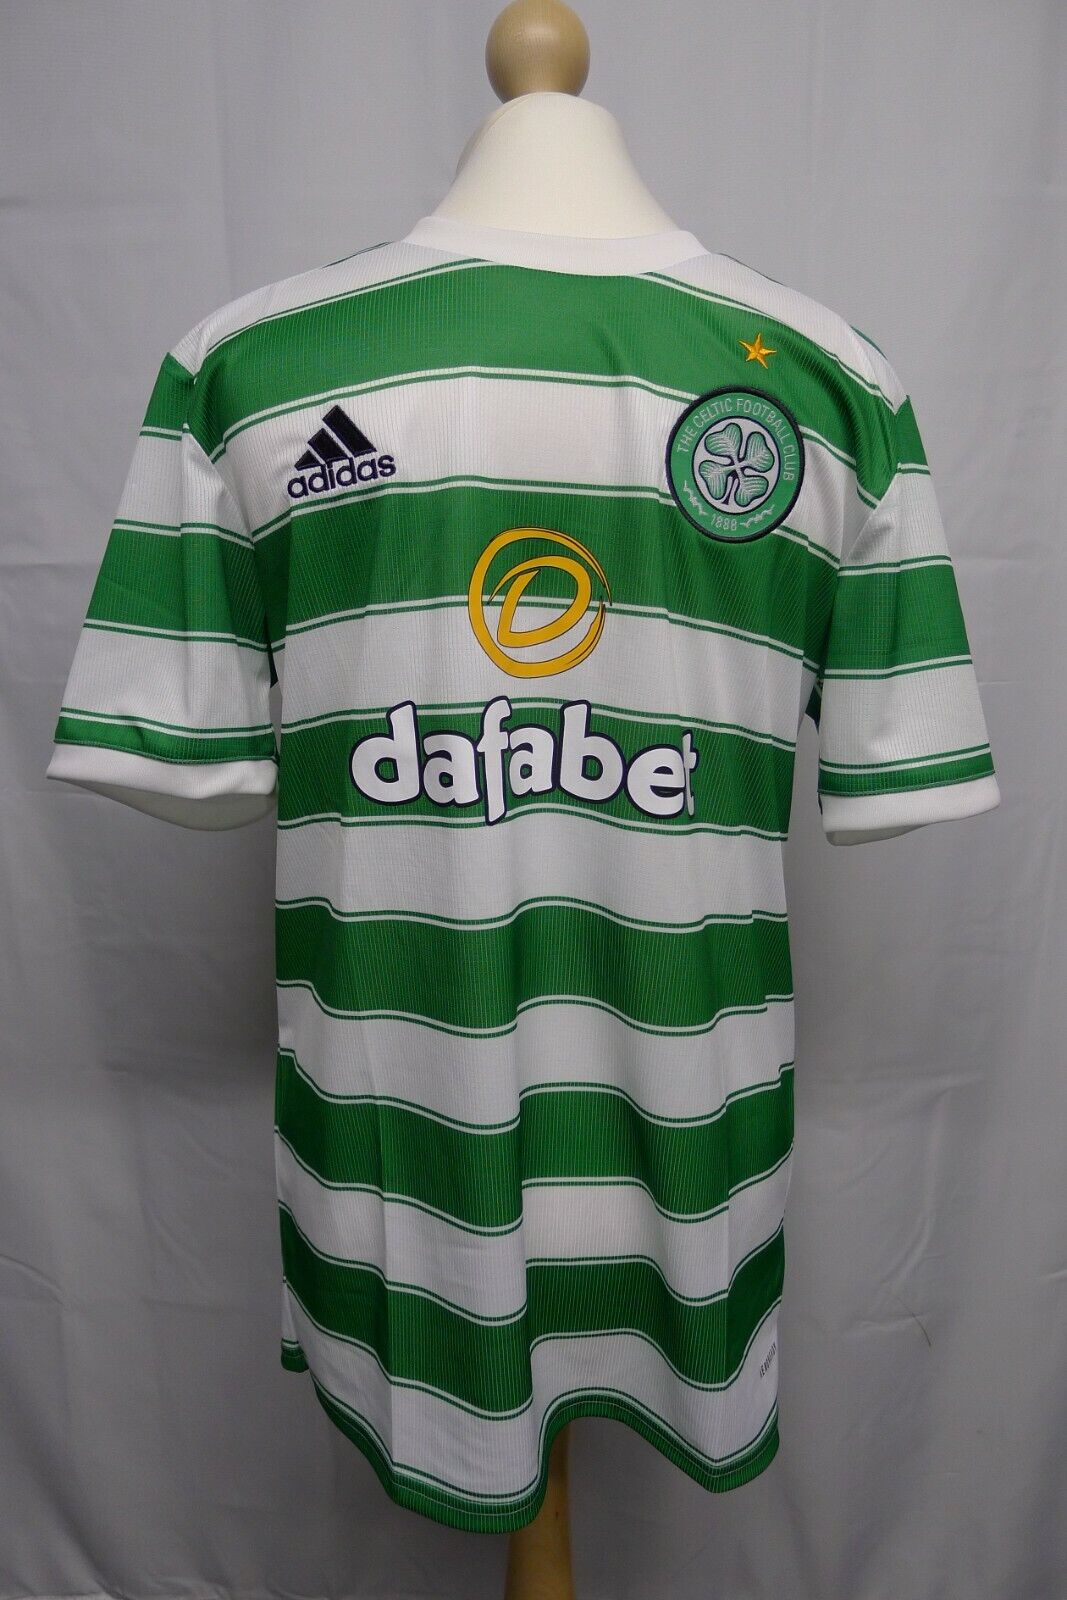 Adidas Men's Celtic Football Shirt  Medium RRP £65